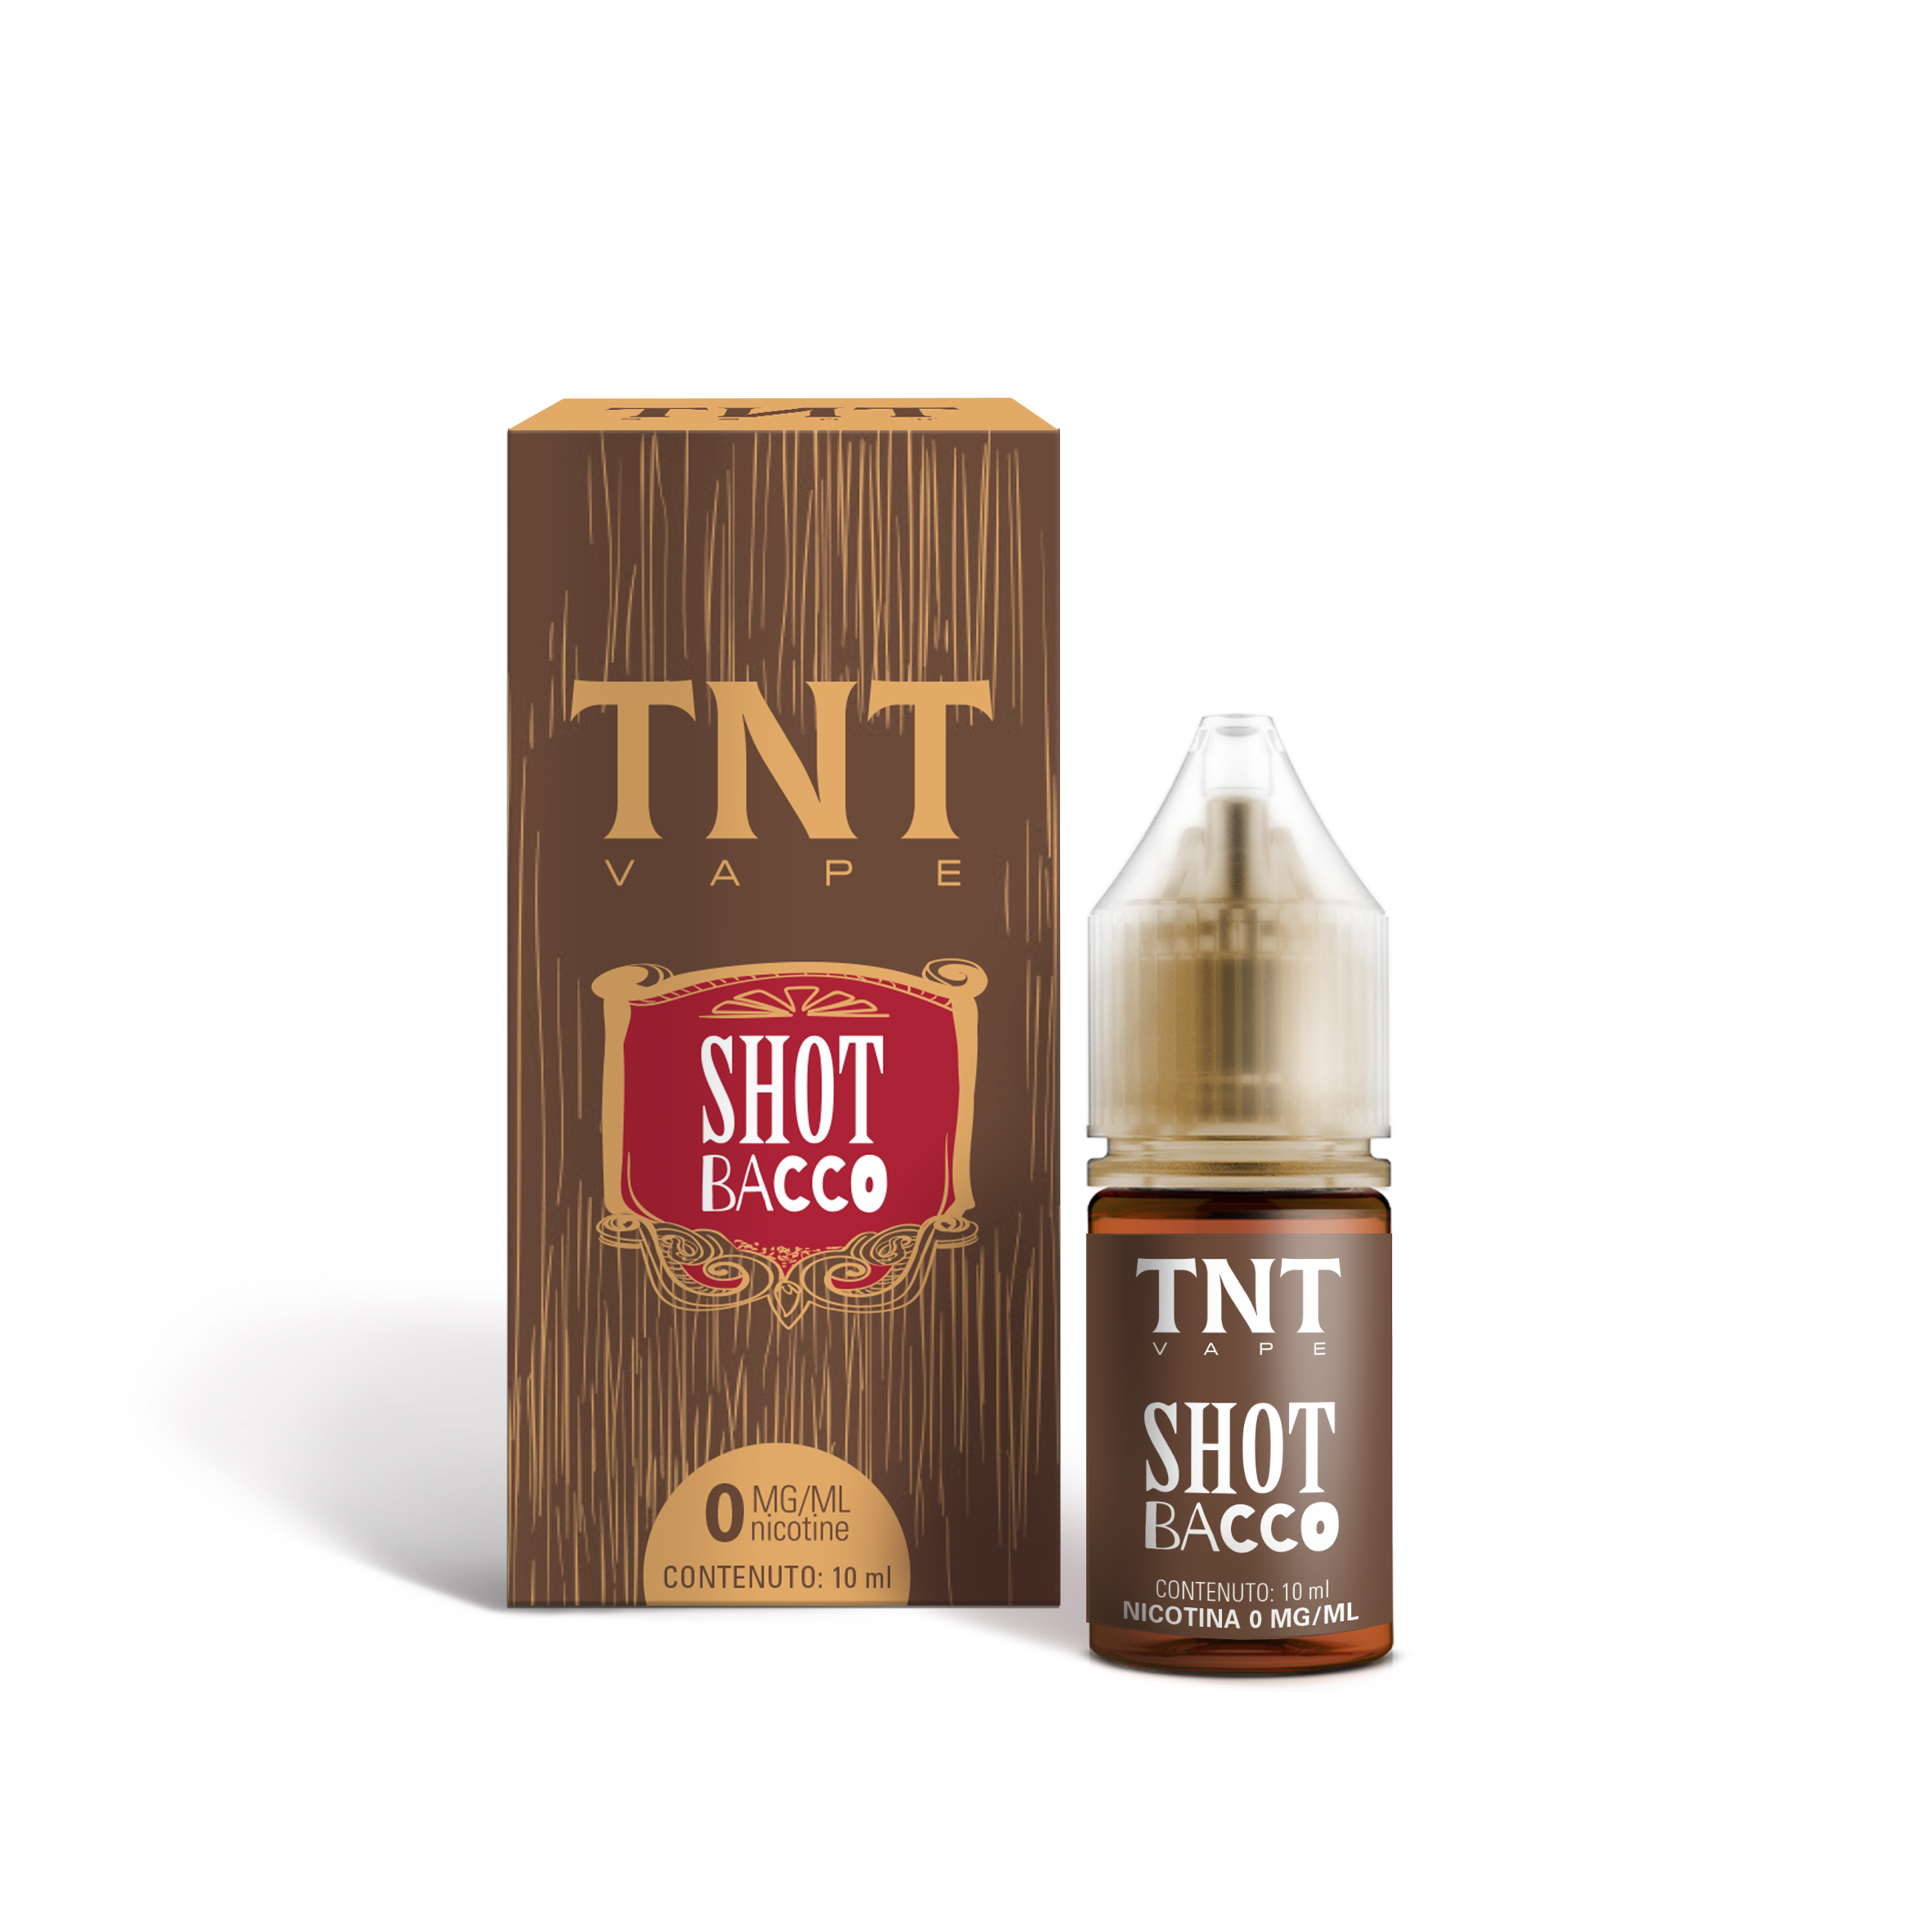 TNT Vape Shot Bacco 10 ml Liquido Pronto Nicotina